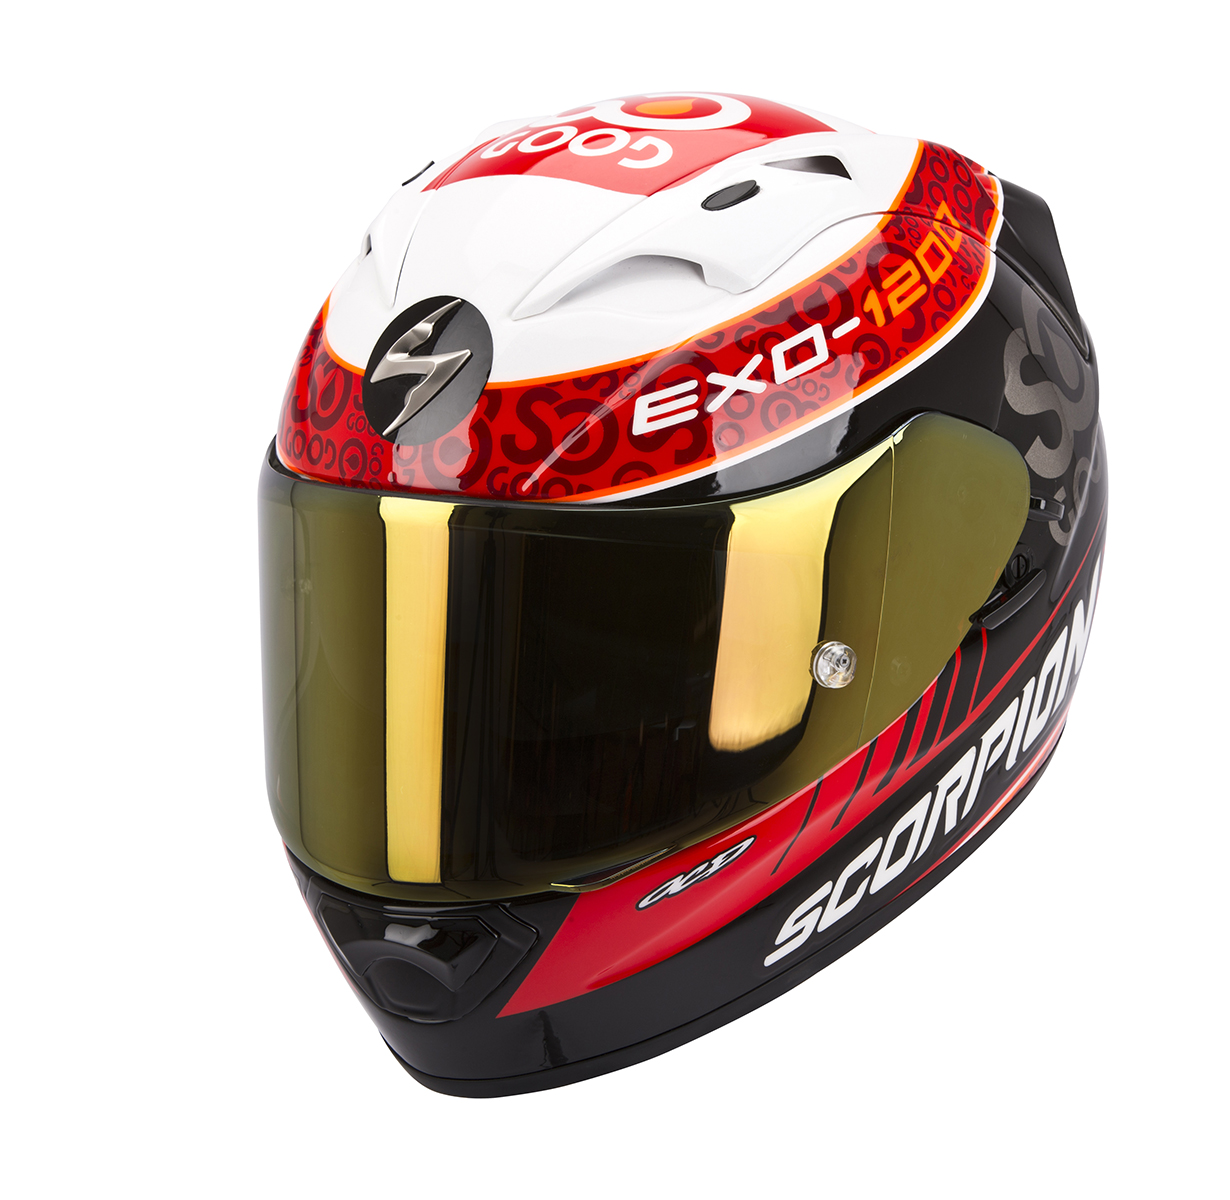 Scorpion air. Scorpion EXO 1200 Air. Шлем Скорпион EXO красно белый. Шлем для мотоцикла белый красный черный. Шлем Scorpion EXO белый с красным рисунком.